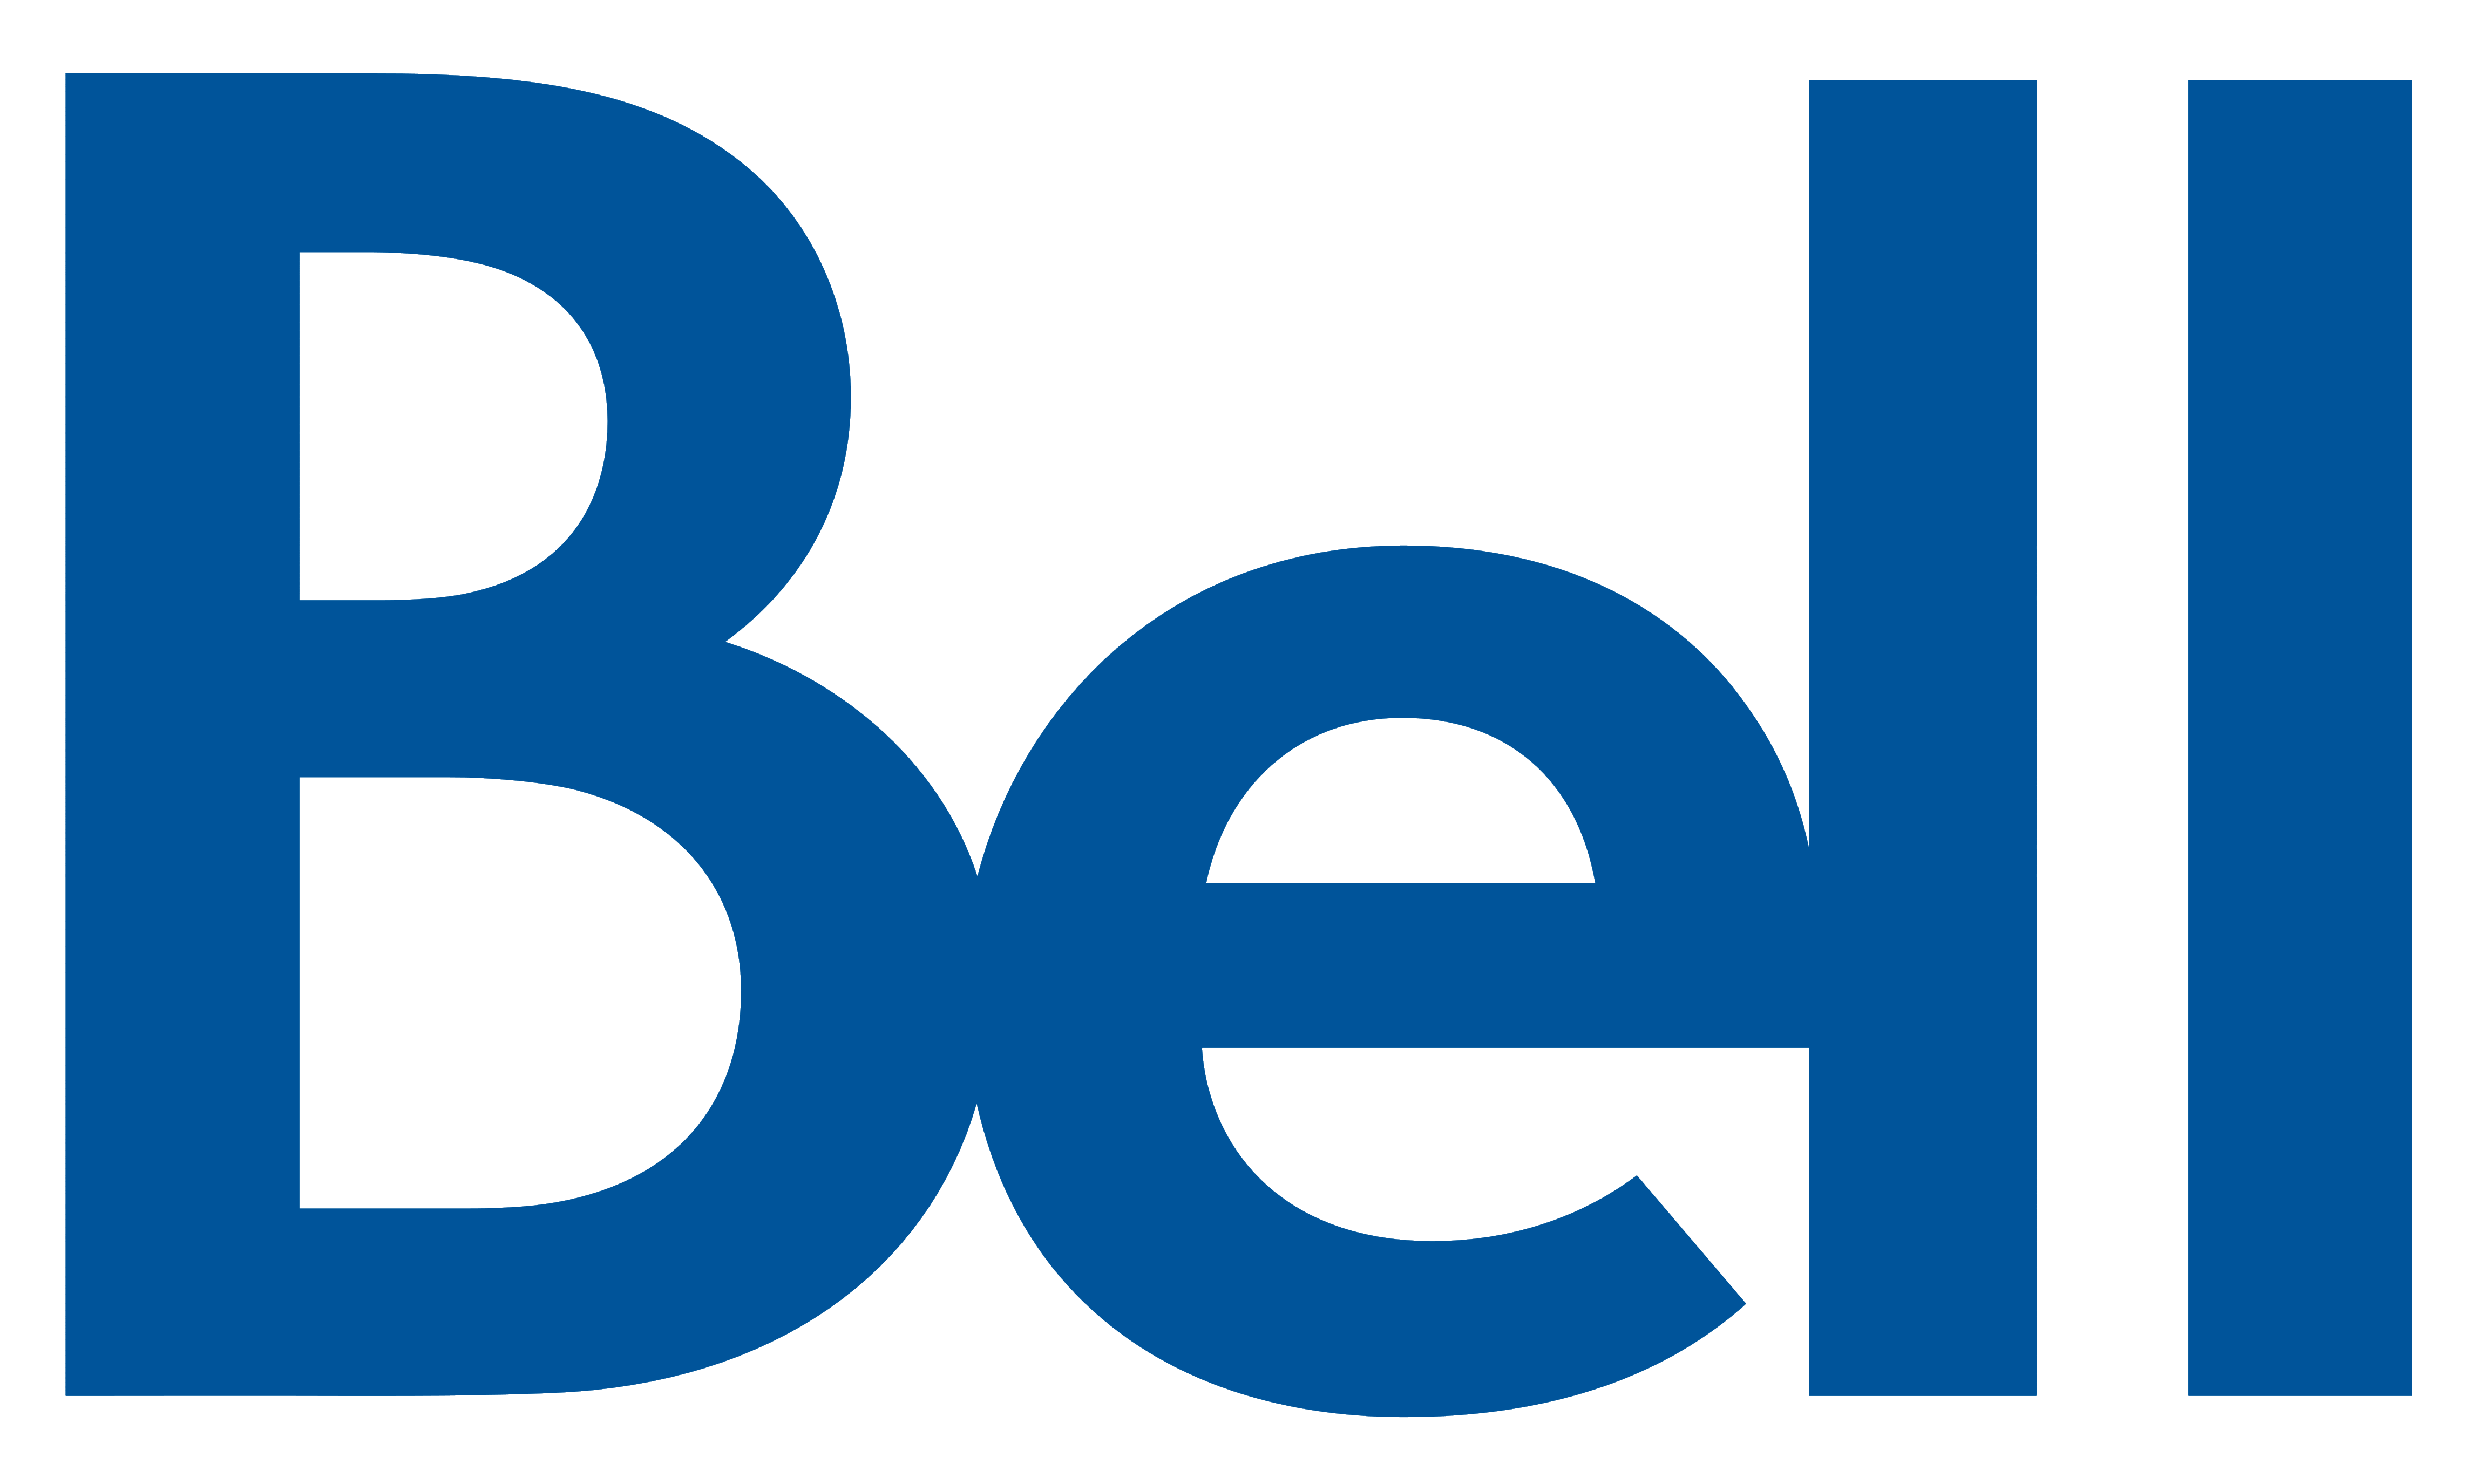 Bell Canada logo, logotype